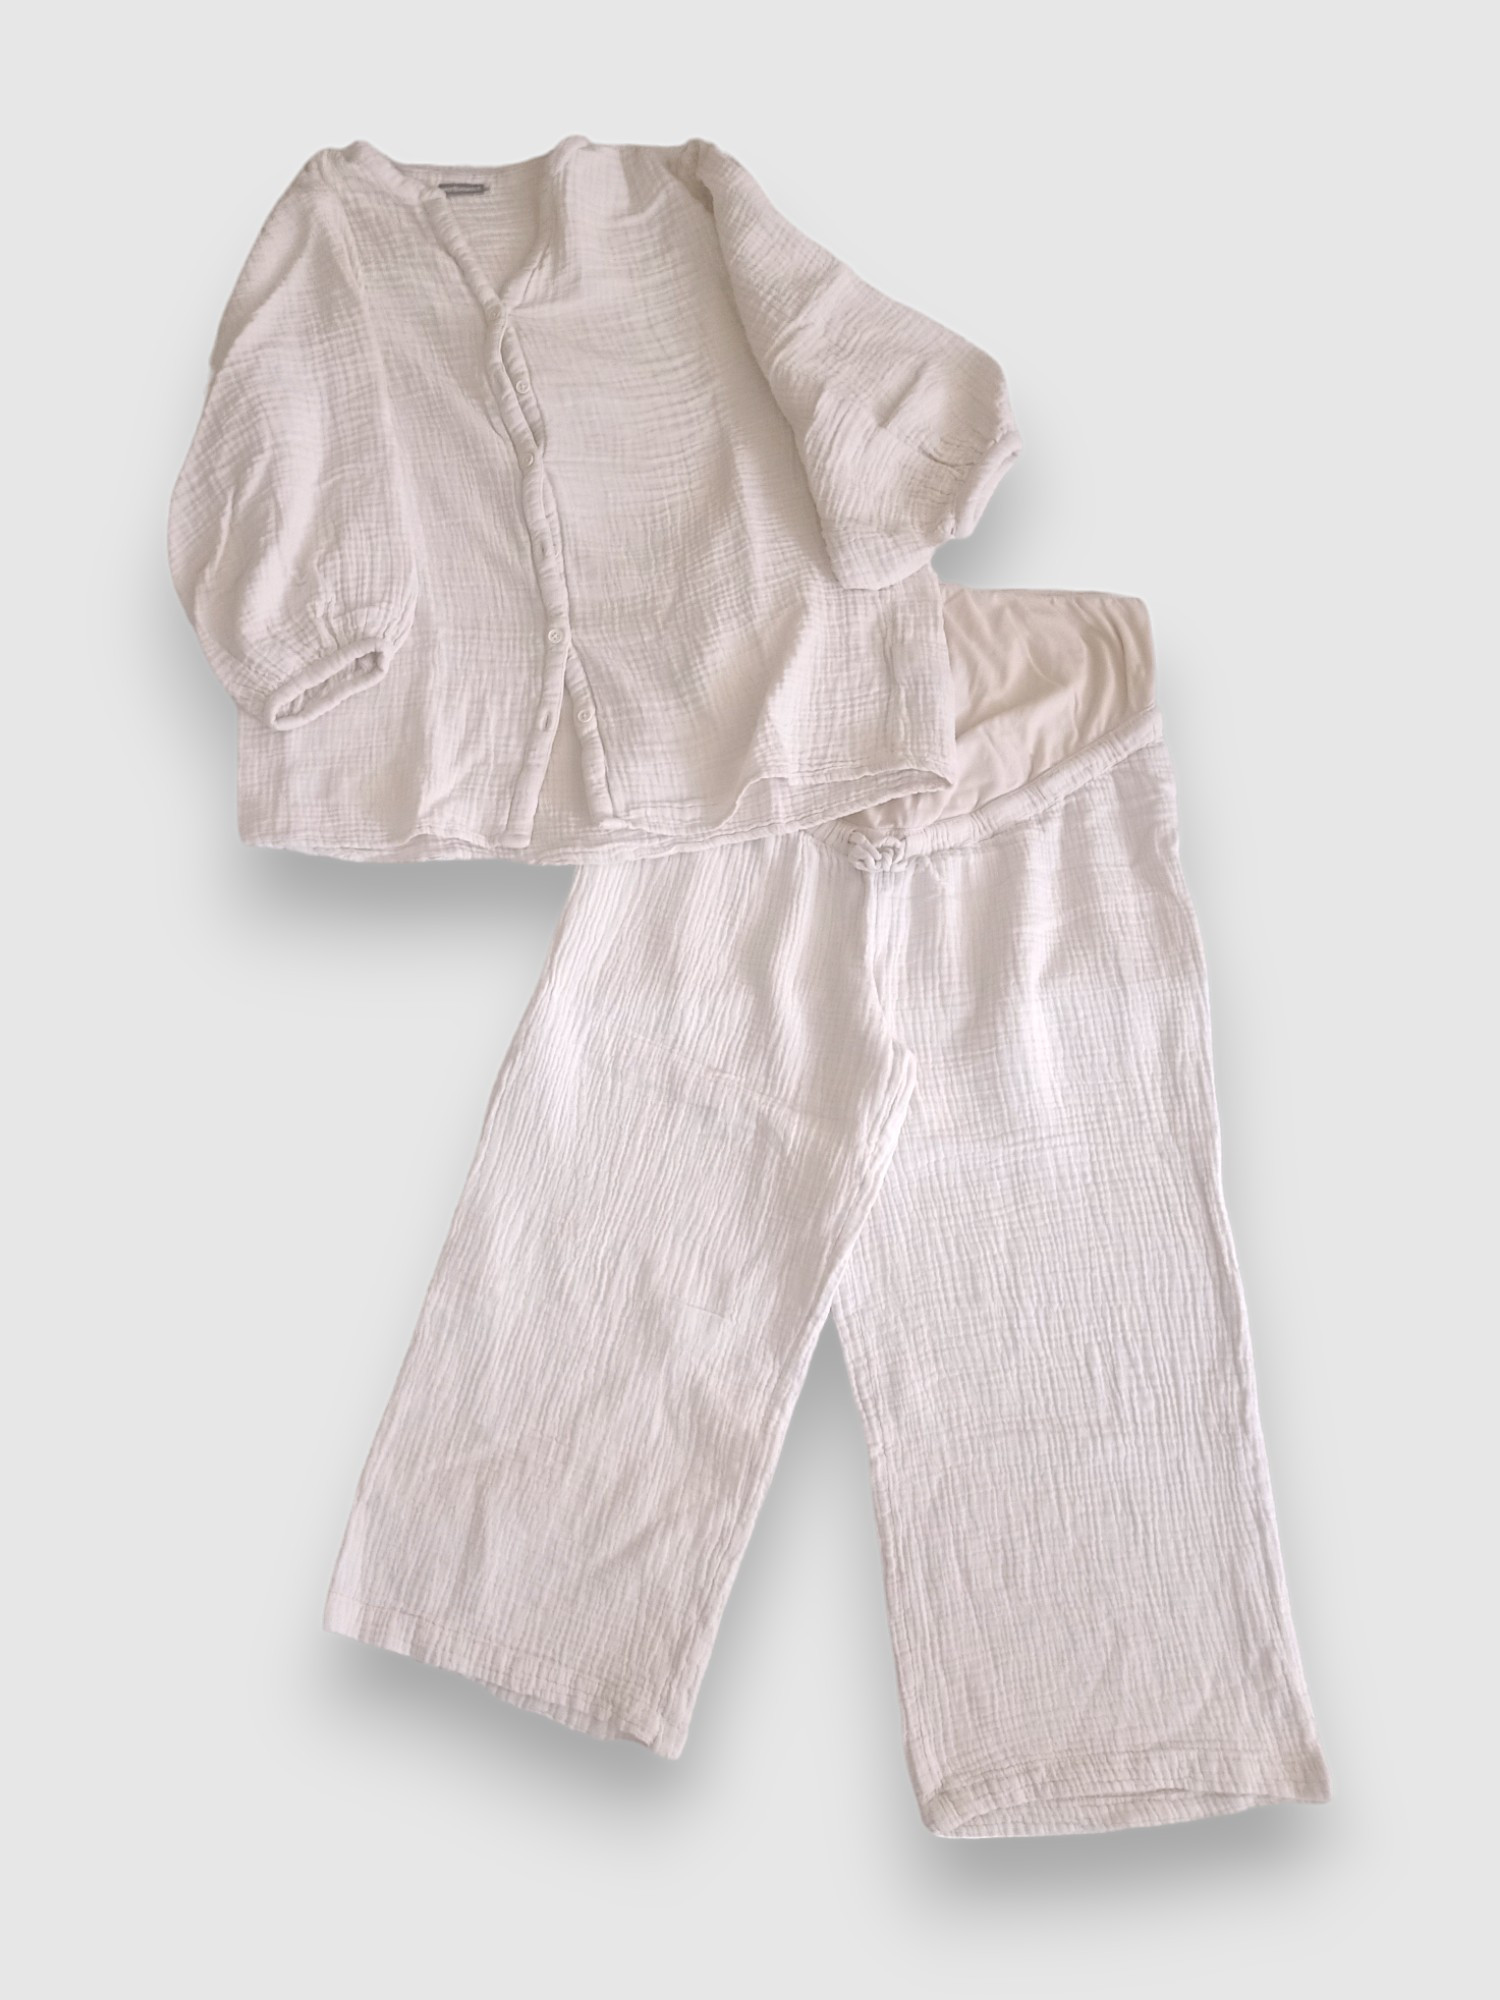 Verbaudet pyjamas cotton gauze super comfort size 40